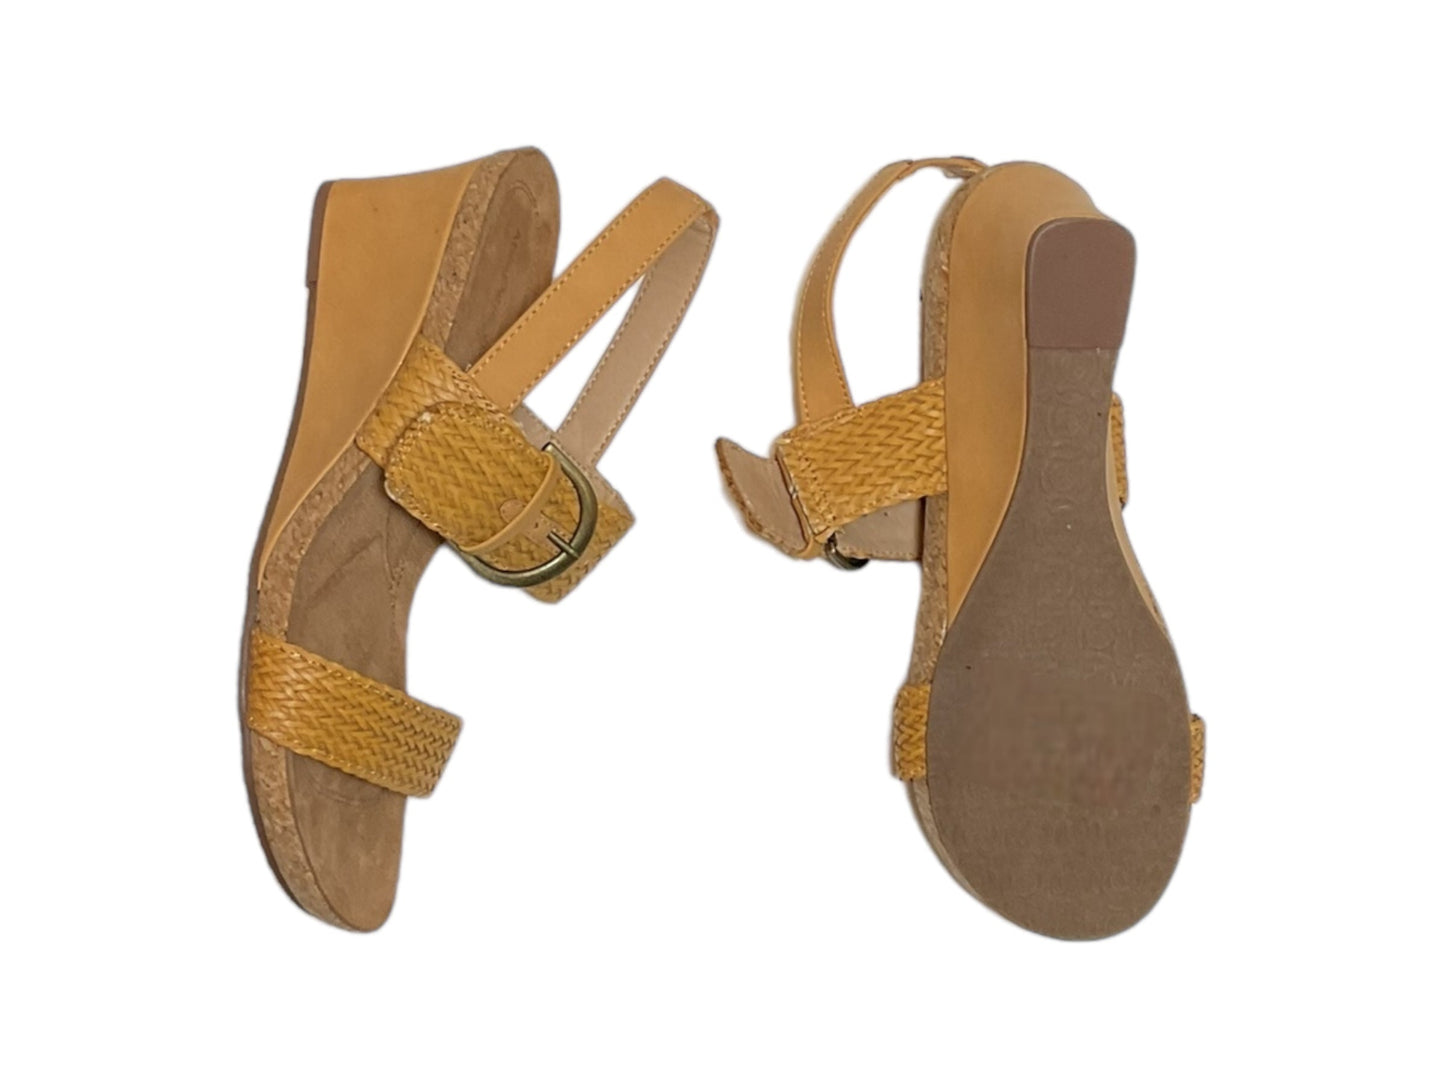 Yellow Sandals Heels Block Adrienne Vittadini, Size 8.5